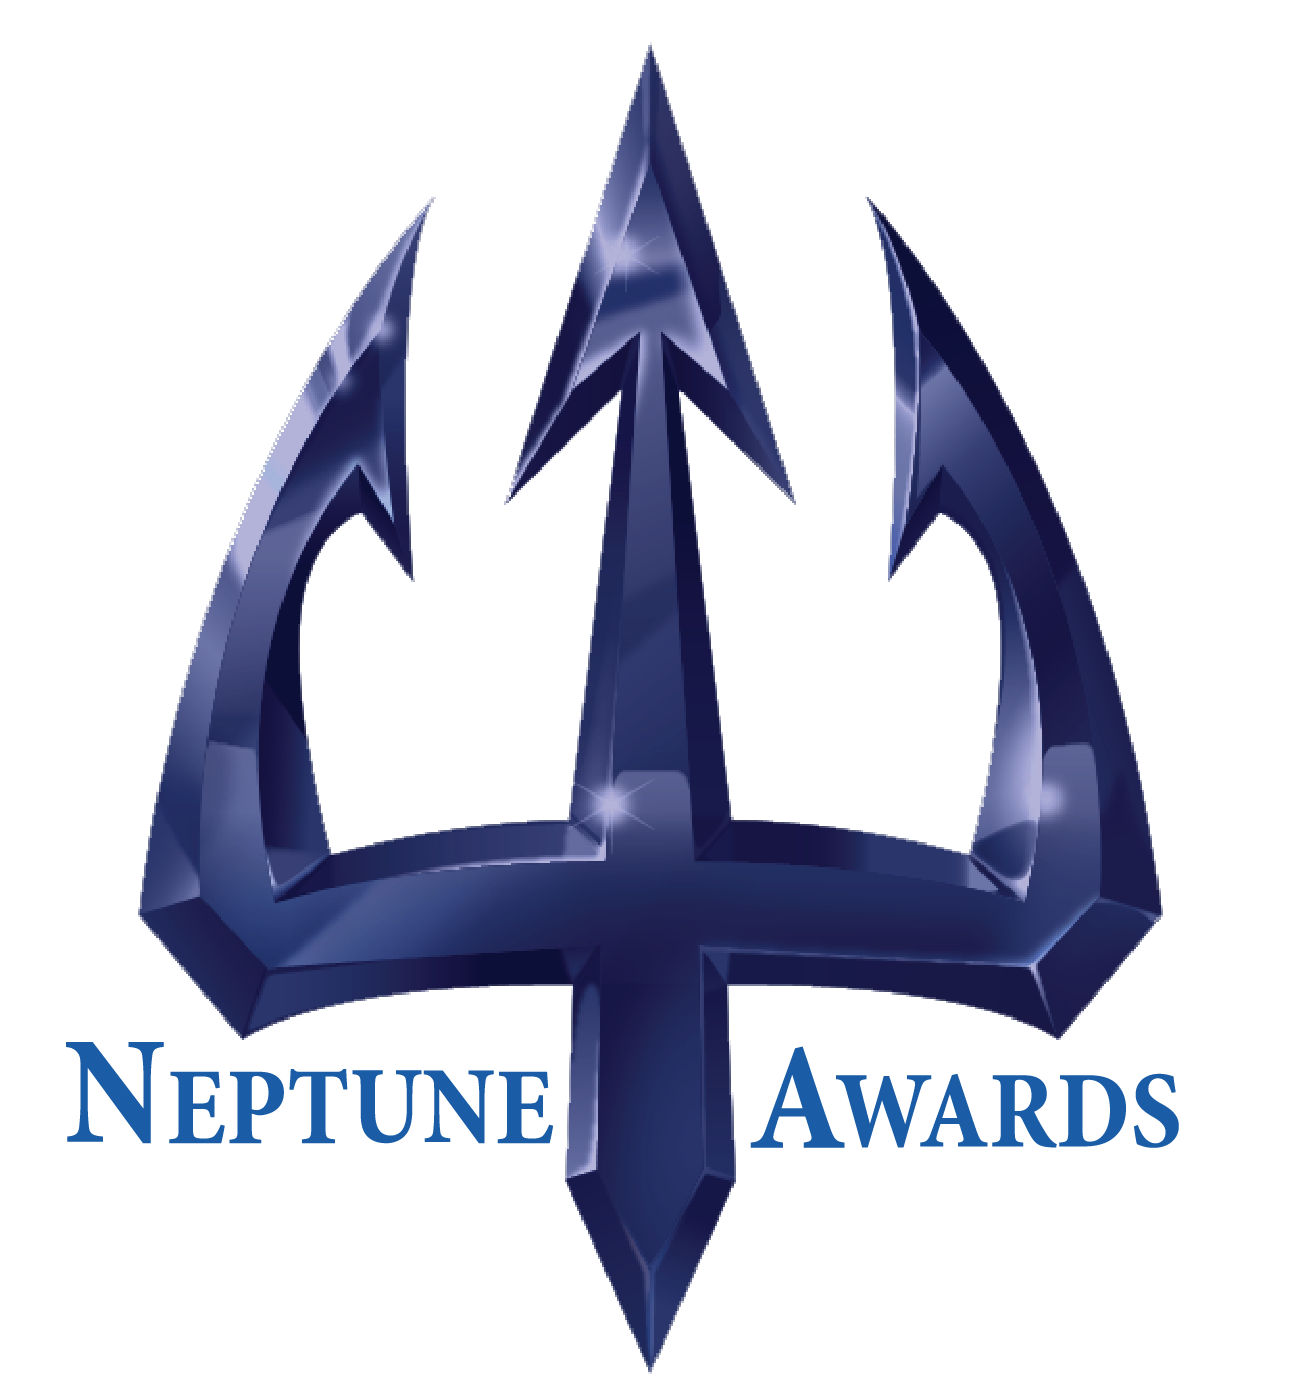 The Neptune Award recognizes the best marine marketing in North America.